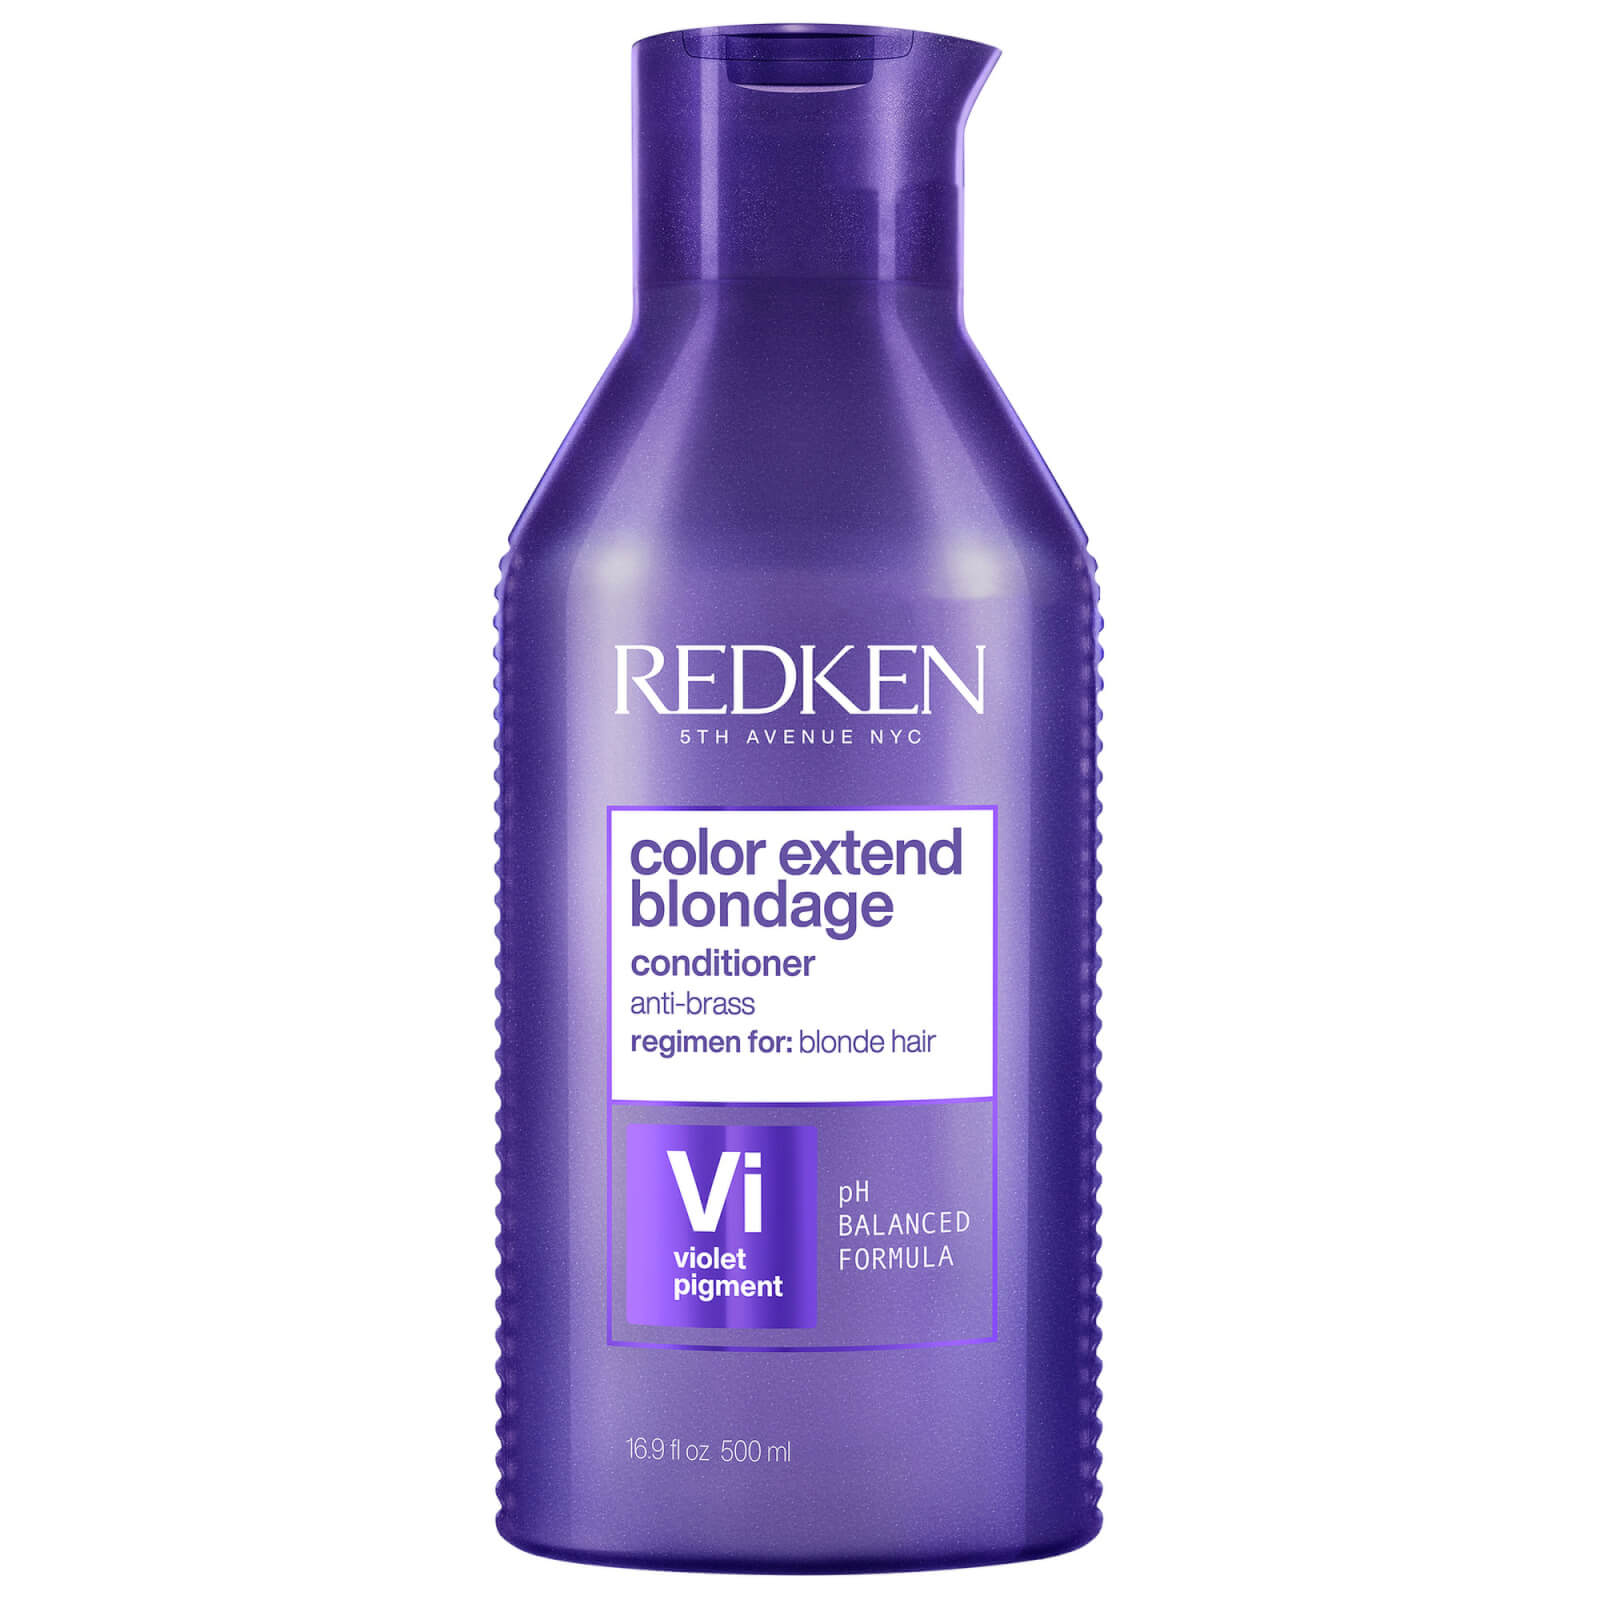 Redken Color Extend Blondage Conditioner For Eliminating Brassiness In Blonde Hair 500ml von Redken